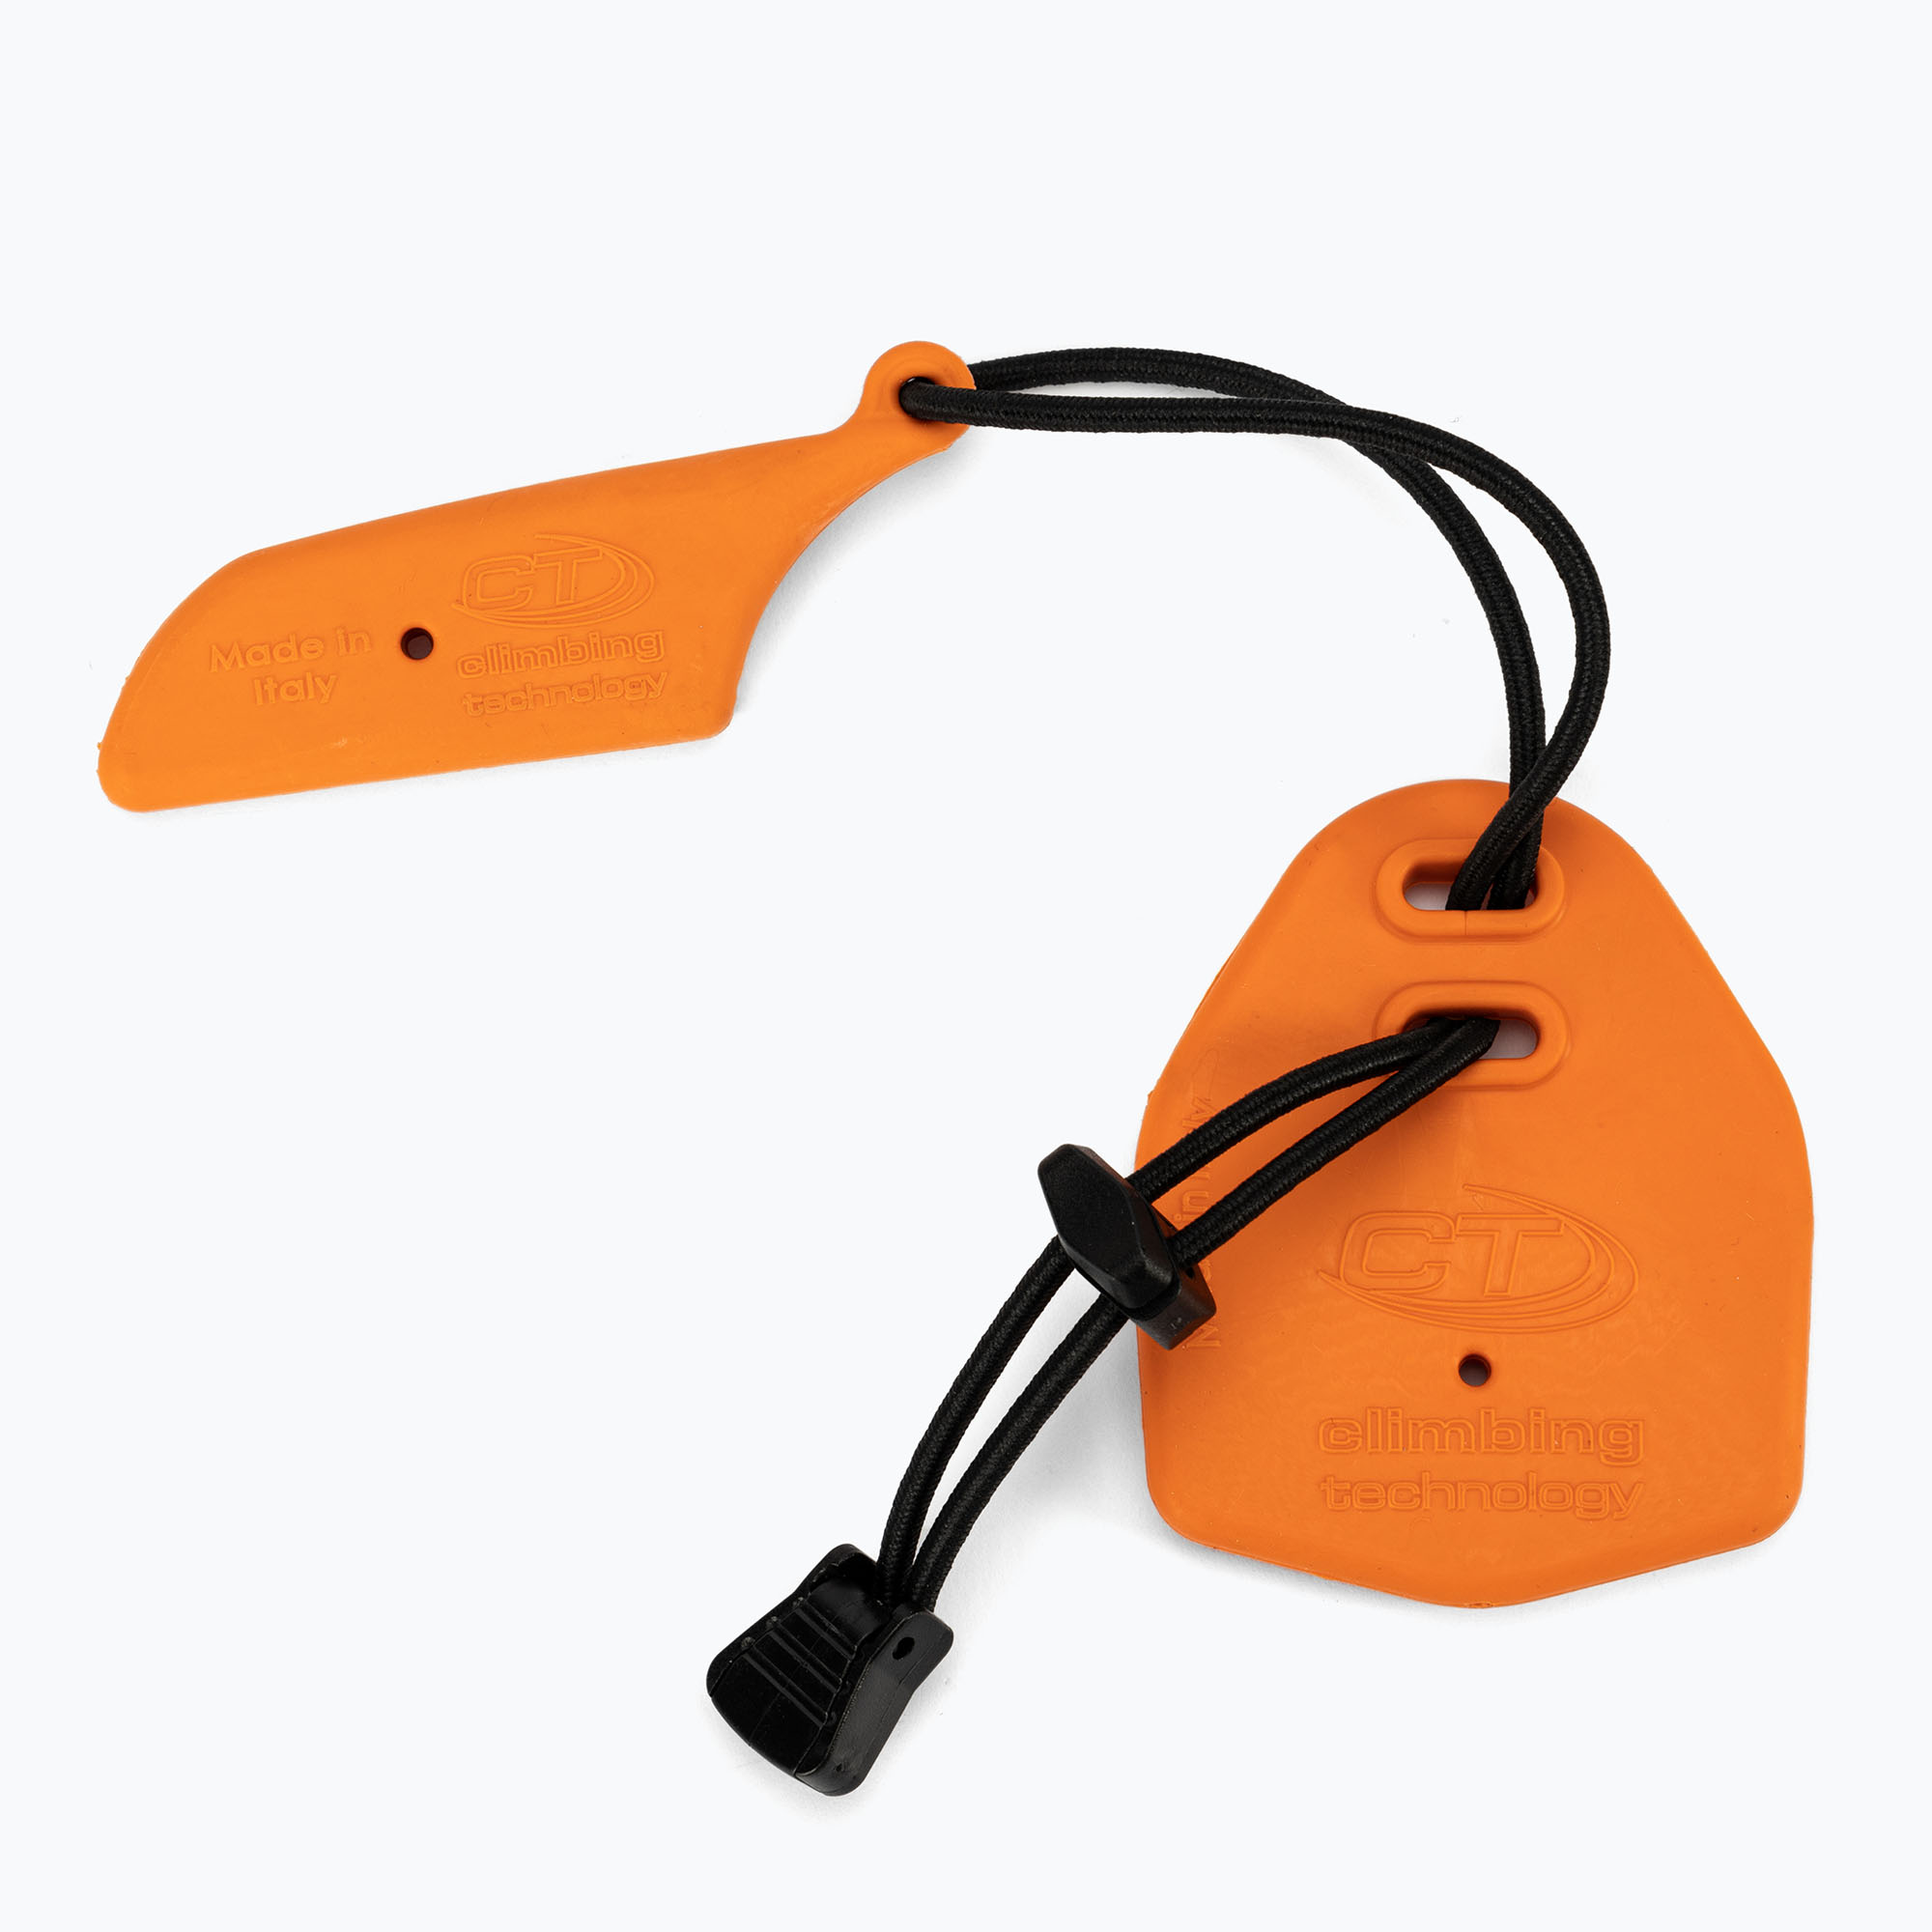 Climbing Technology Acoperă capul portocaliu 6I79004